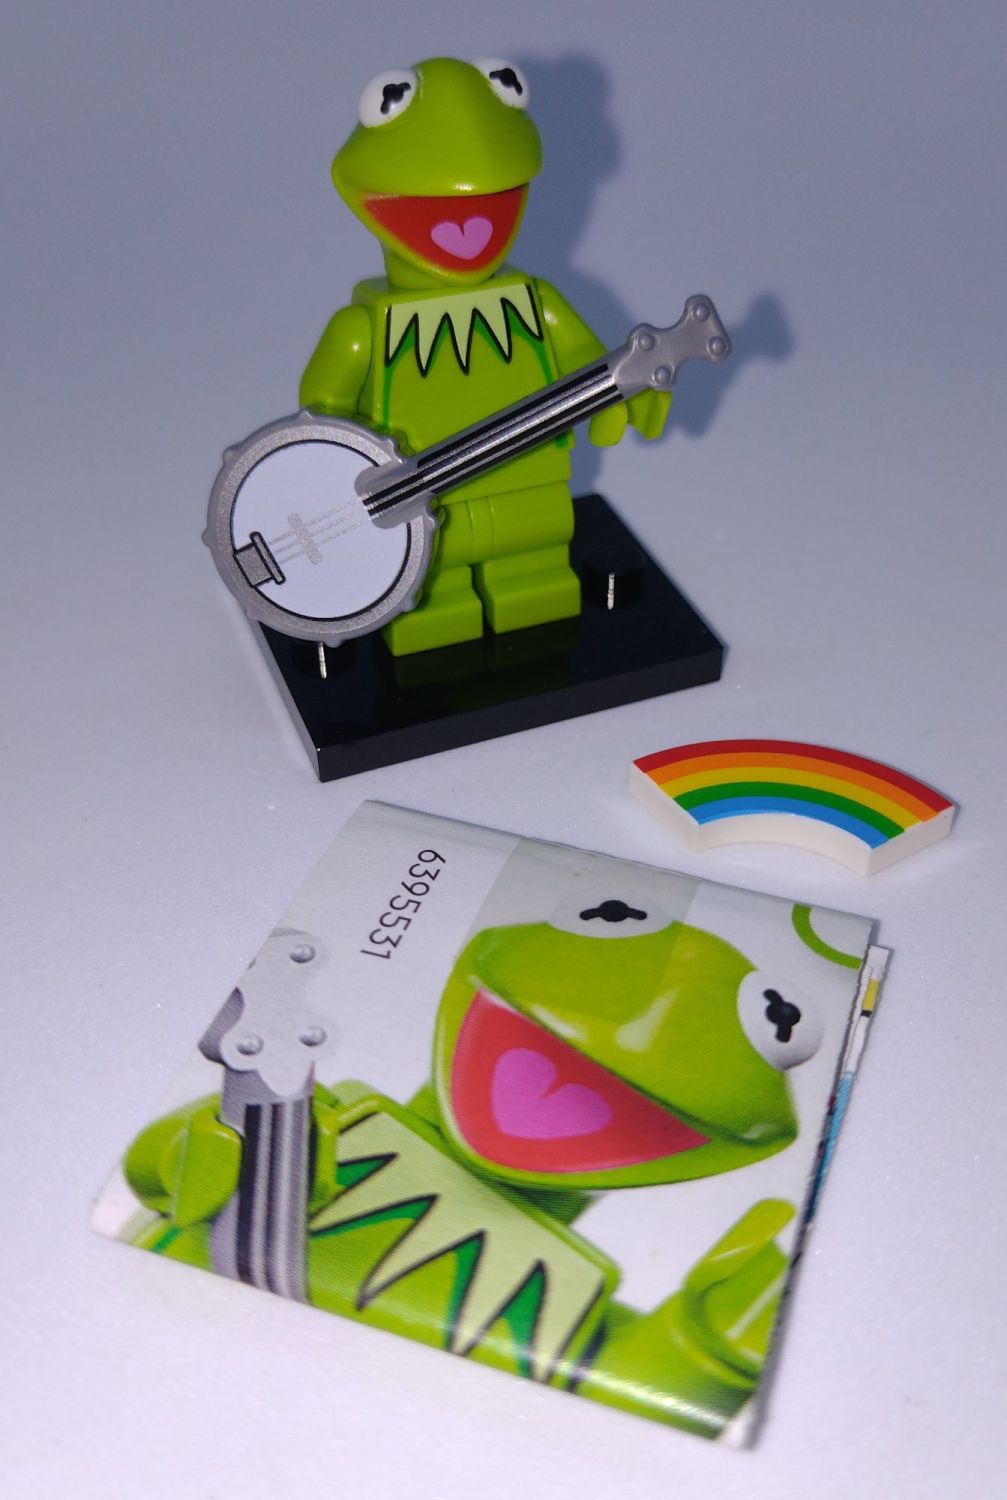 Lego - Disneys The Muppets - Limited Edition Minifigure - Kermit